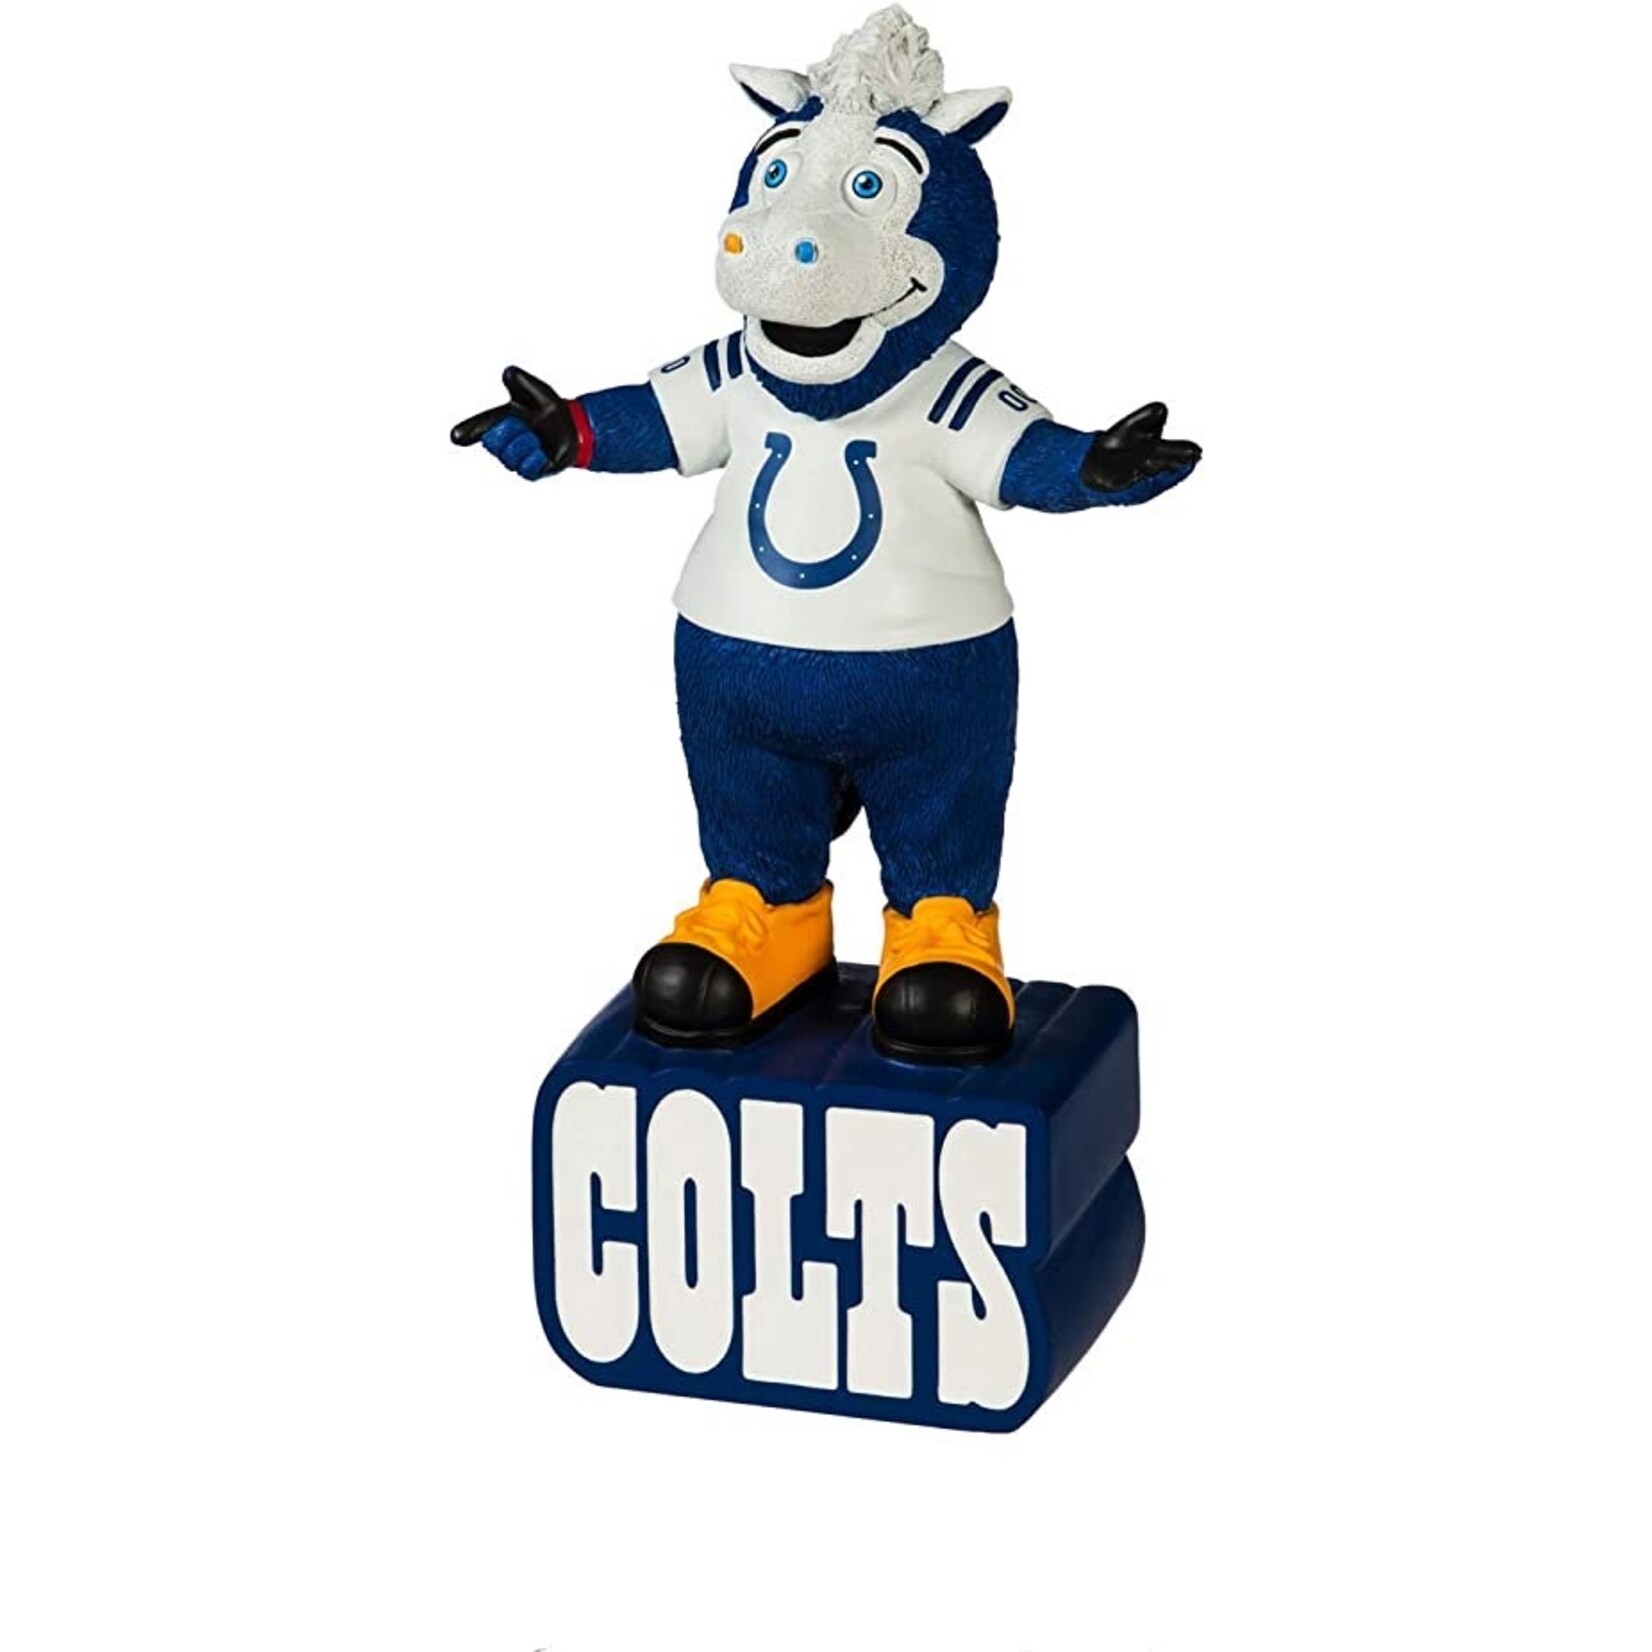 Evergreen Indianapolis Colts Mascot Statue